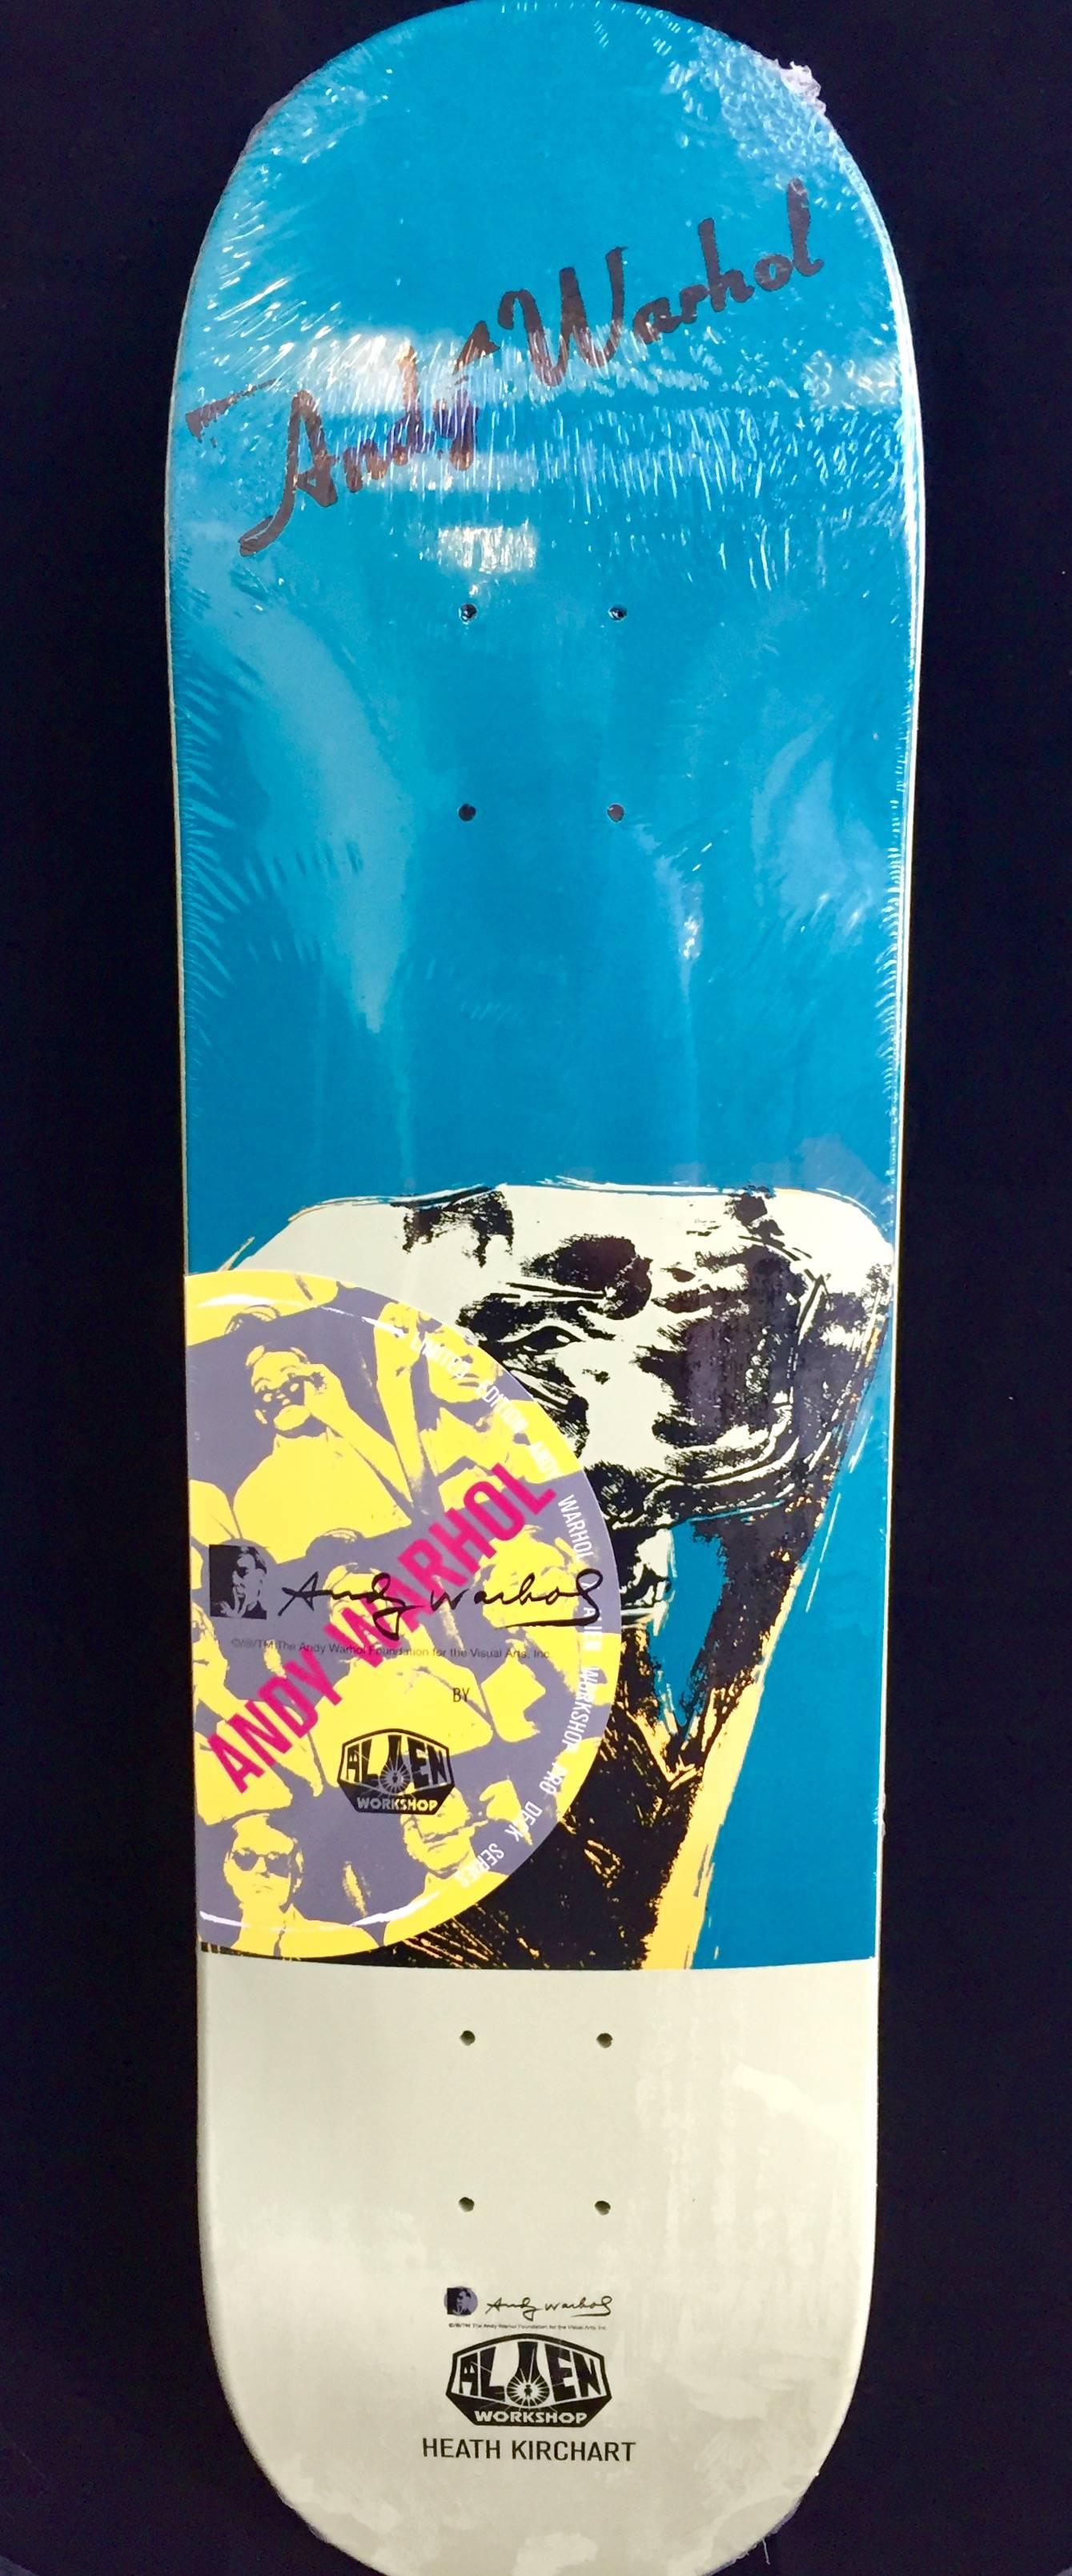 Andy Warhol Skull Skateboard Deck - Pop Art Art by (after) Andy Warhol